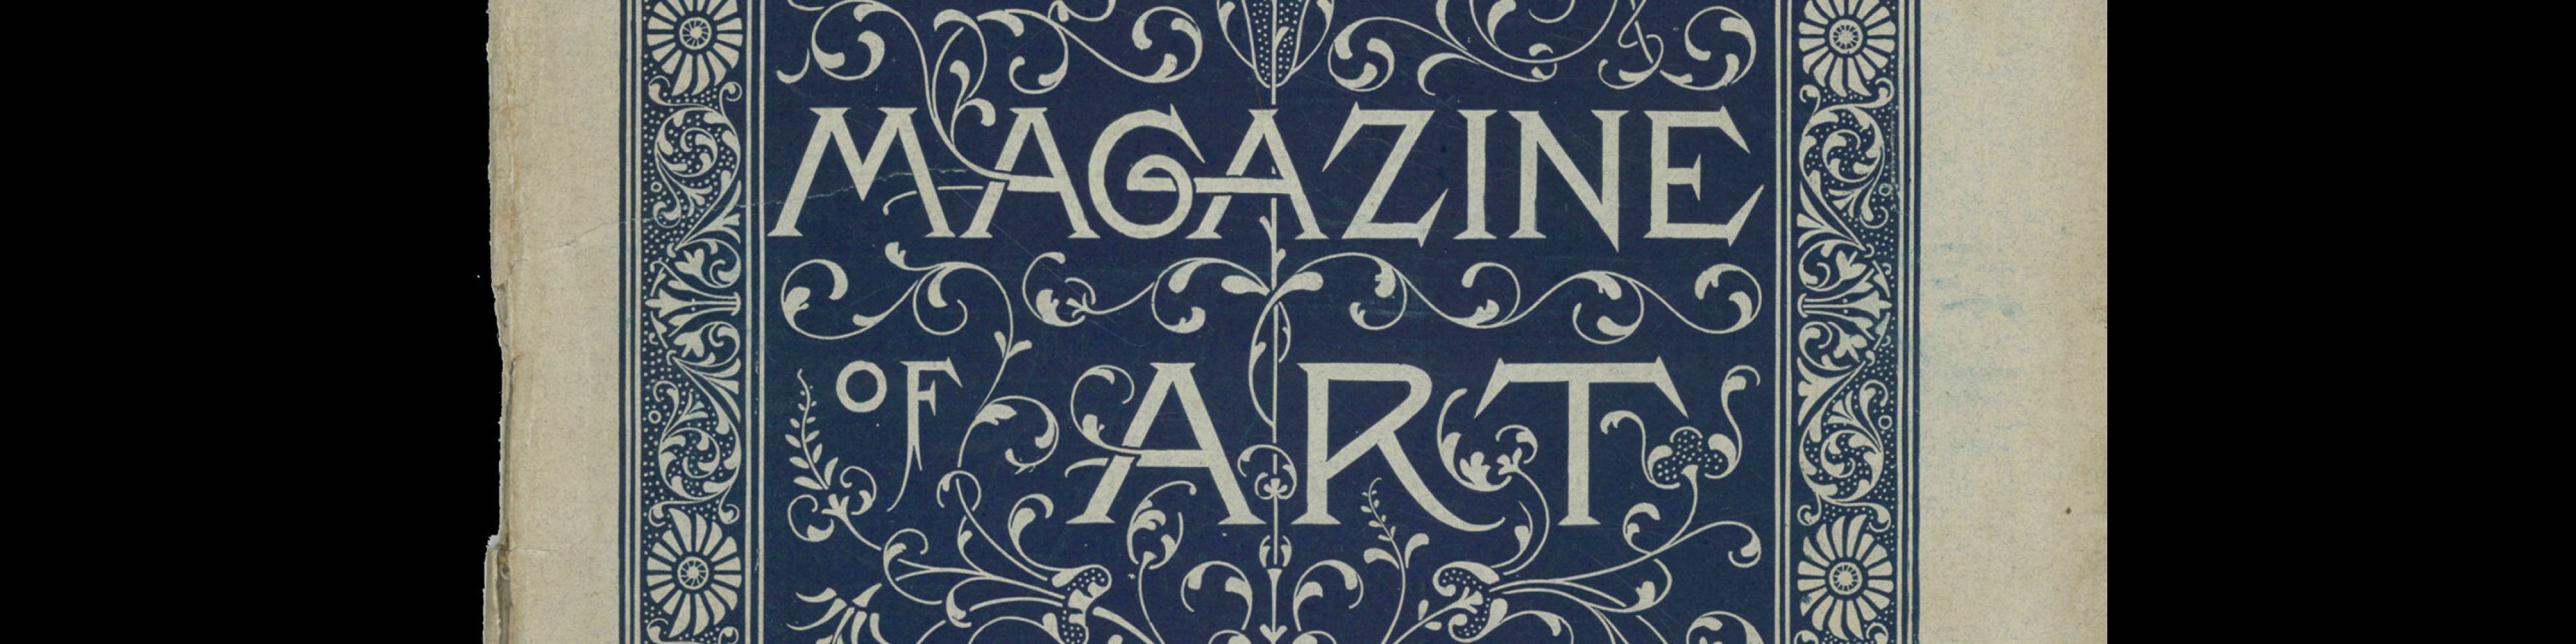 The Magazine of Art, 90, April 1888